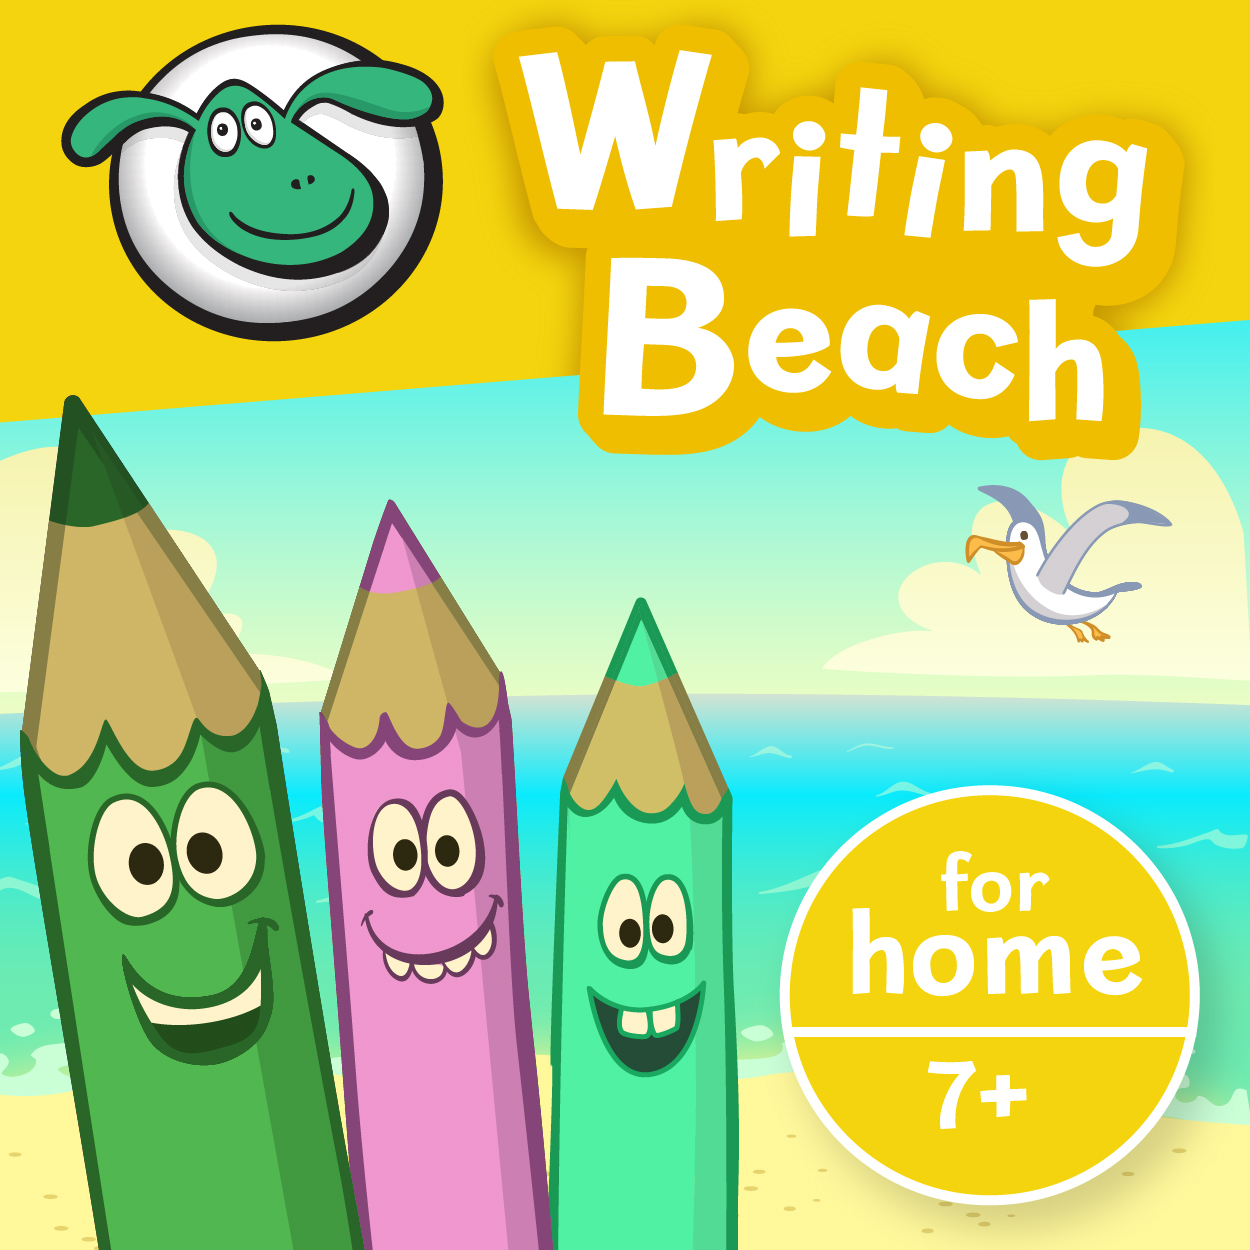 Writing Beach for home